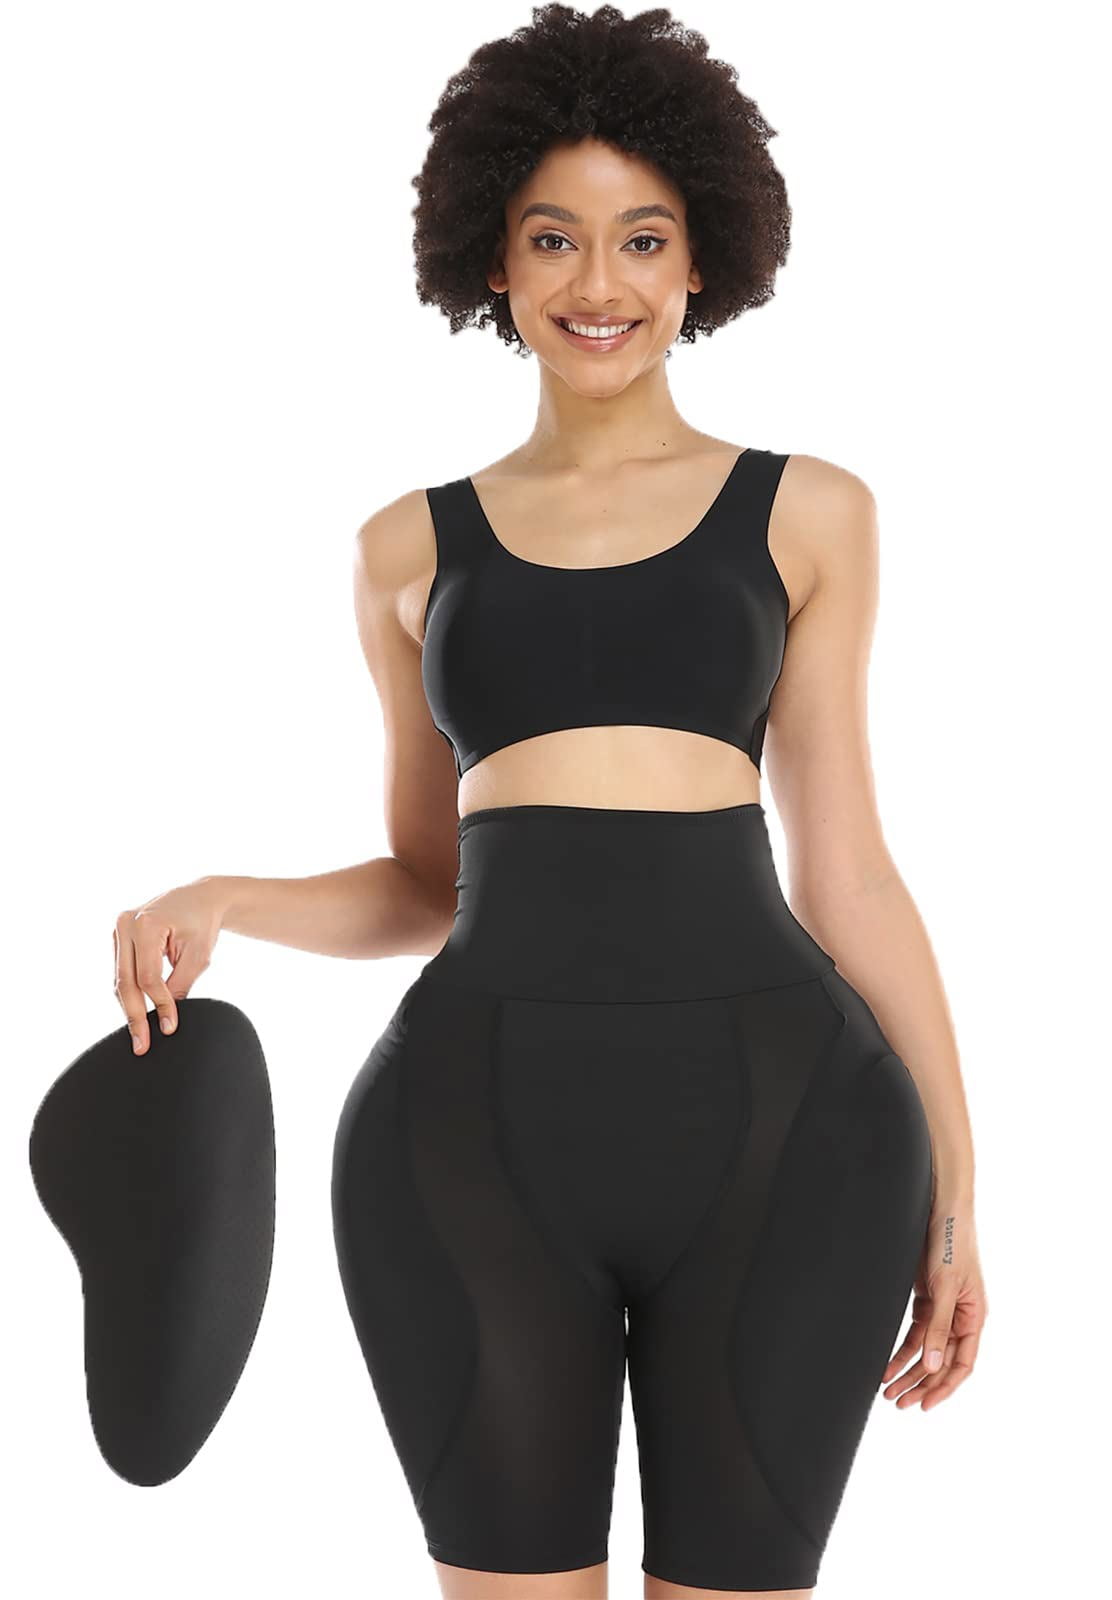 Lilvigor Butt Lifter Panties Body Shaper for Women Padded Hip Enhancer  Tummy Control Shapewear BBL Shorts 